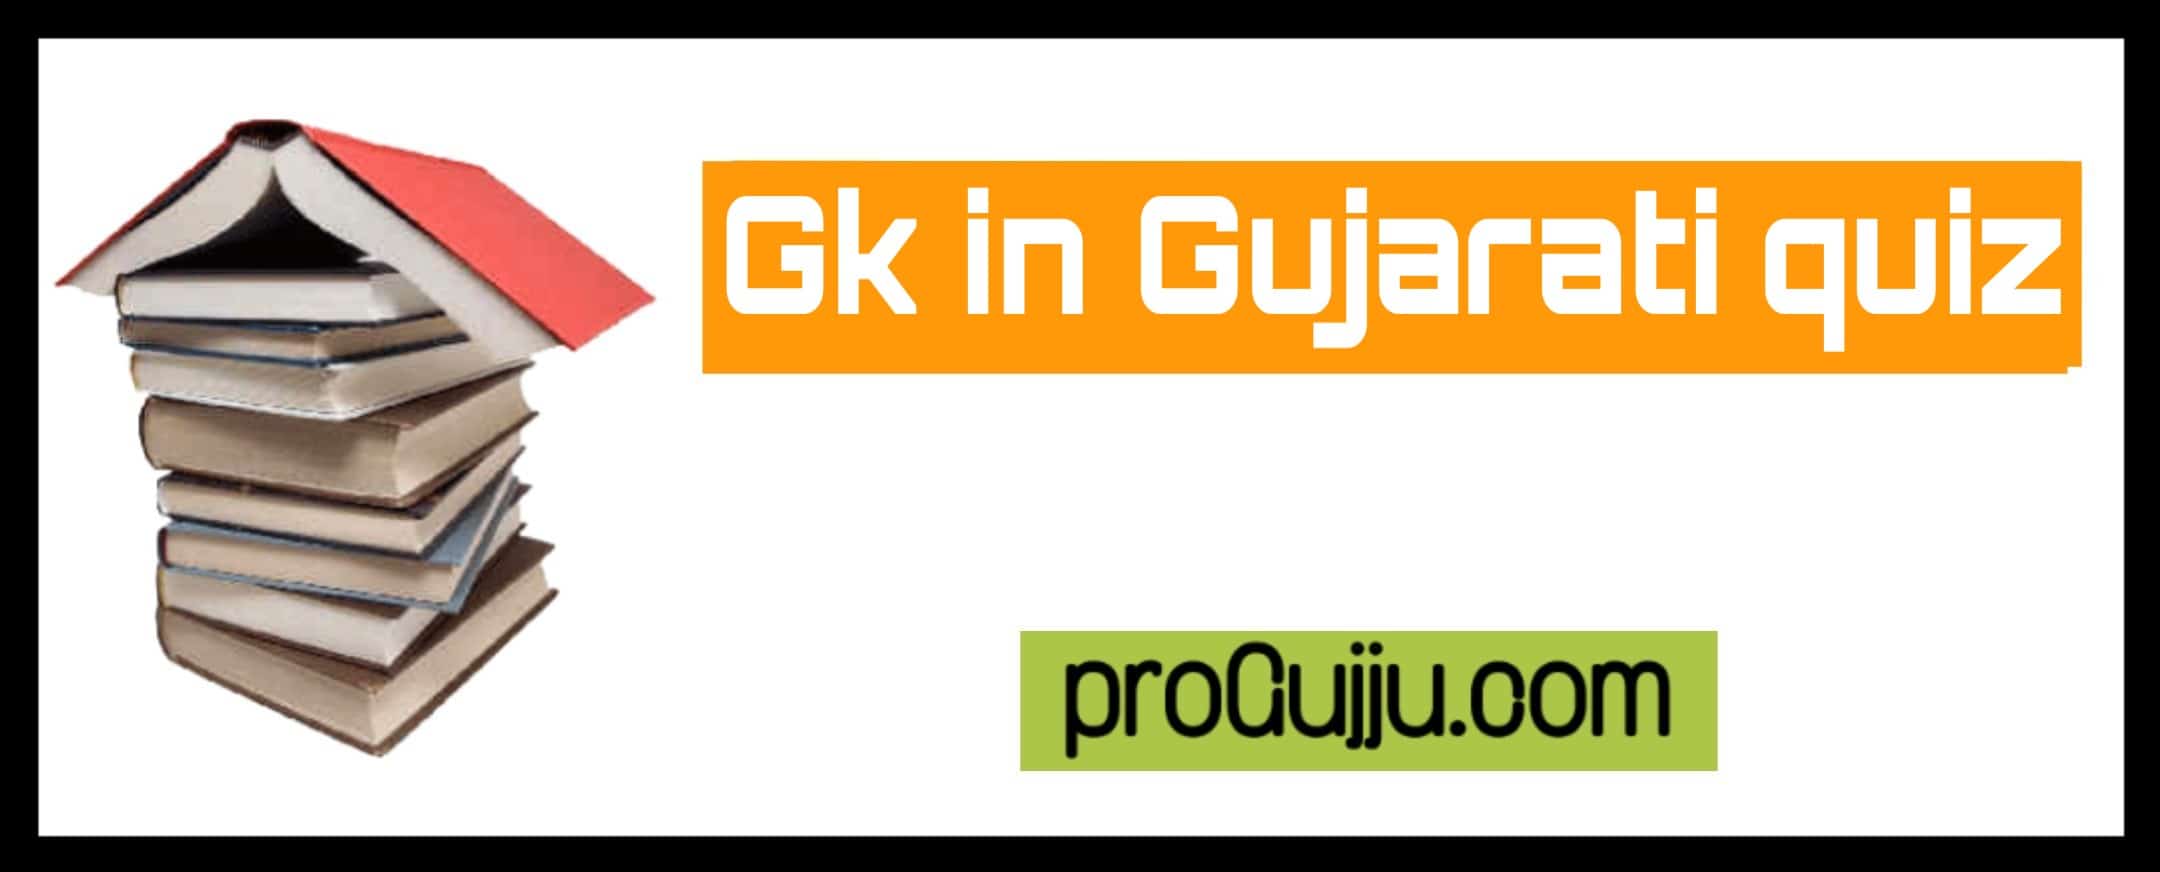 Gk in gujarati quiz PDF Download